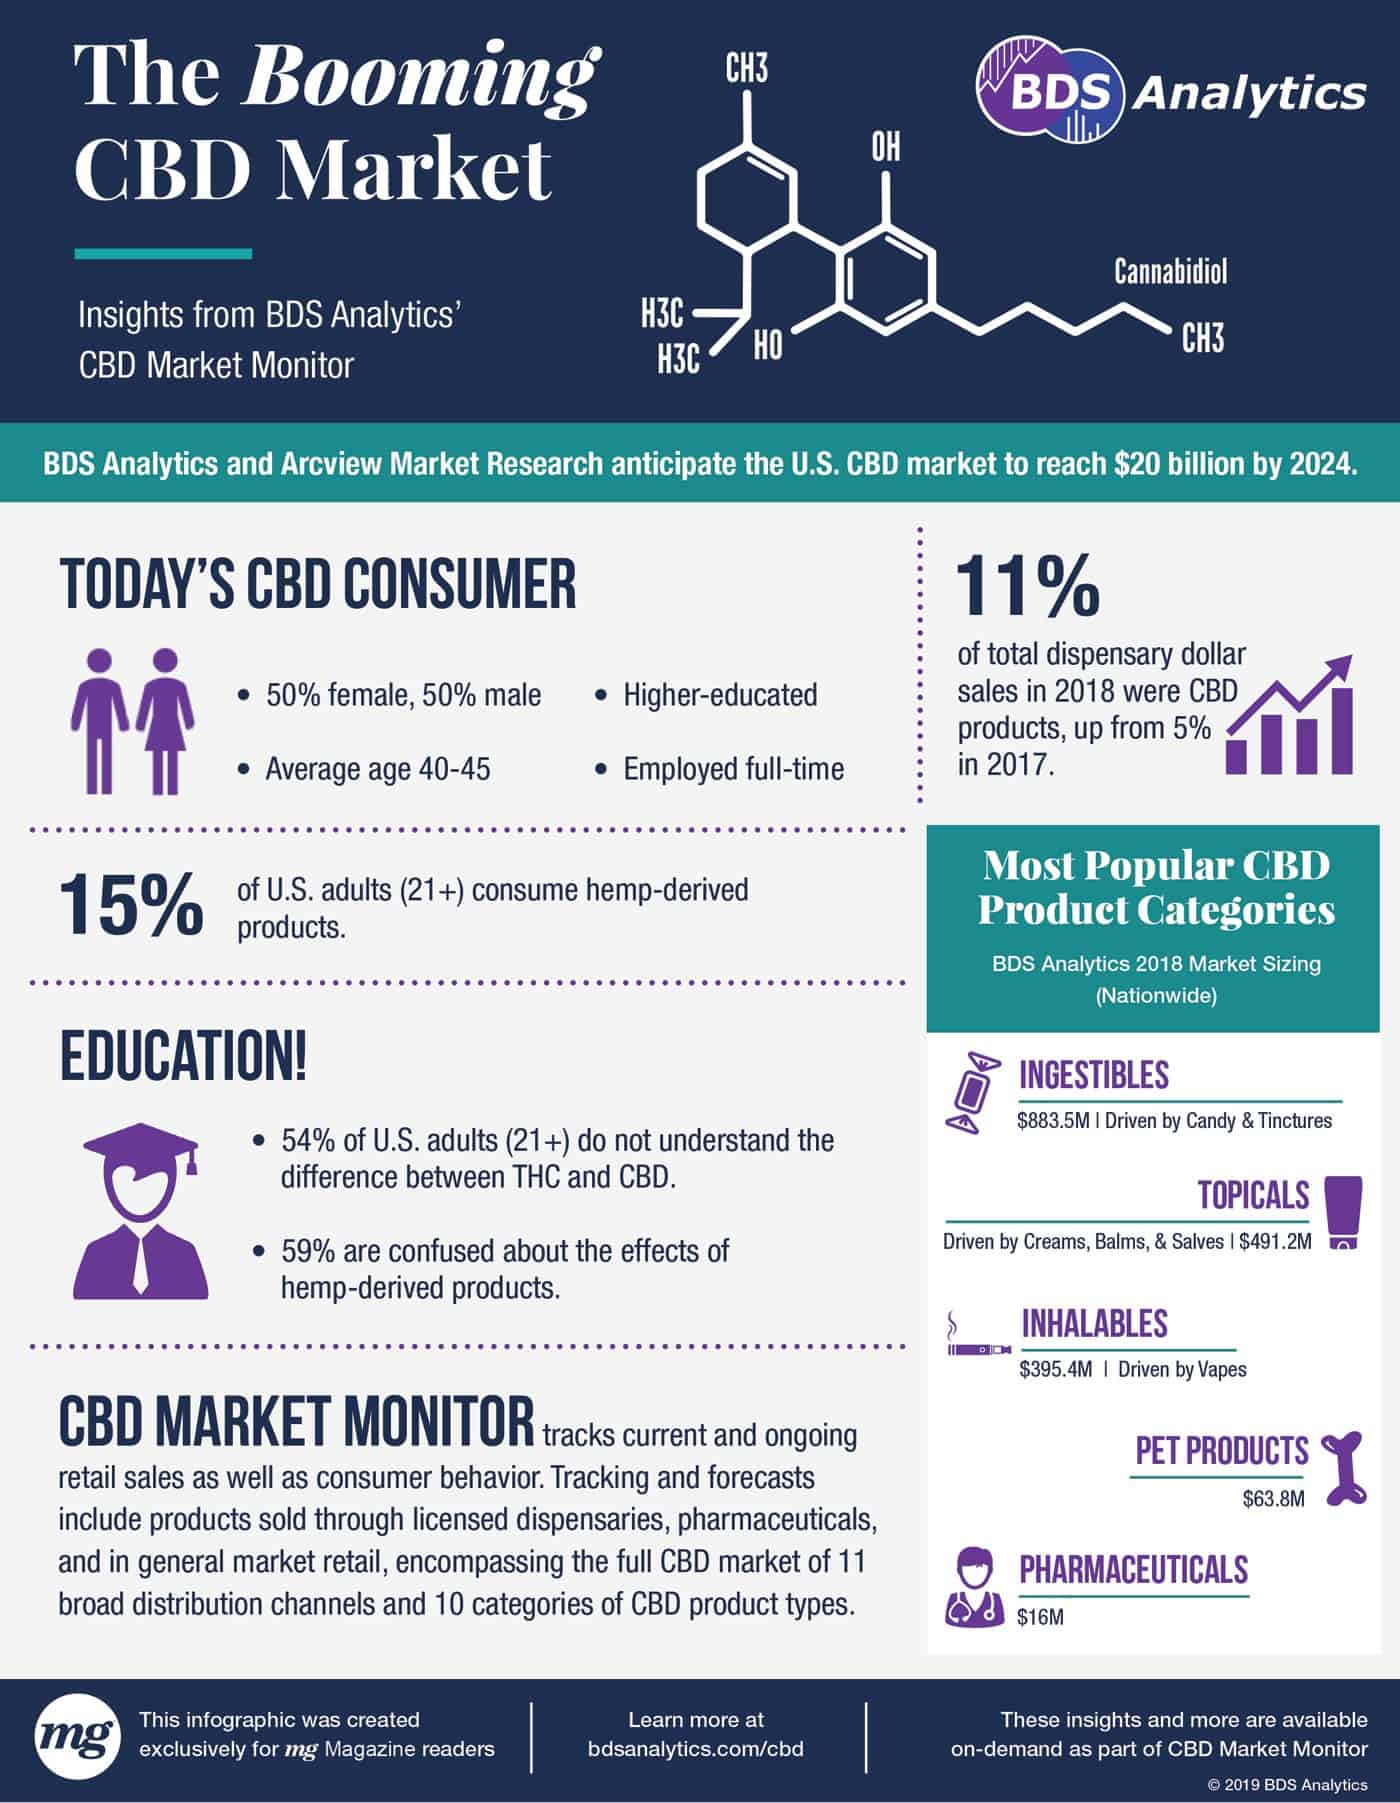 Booming CBD Market infographic